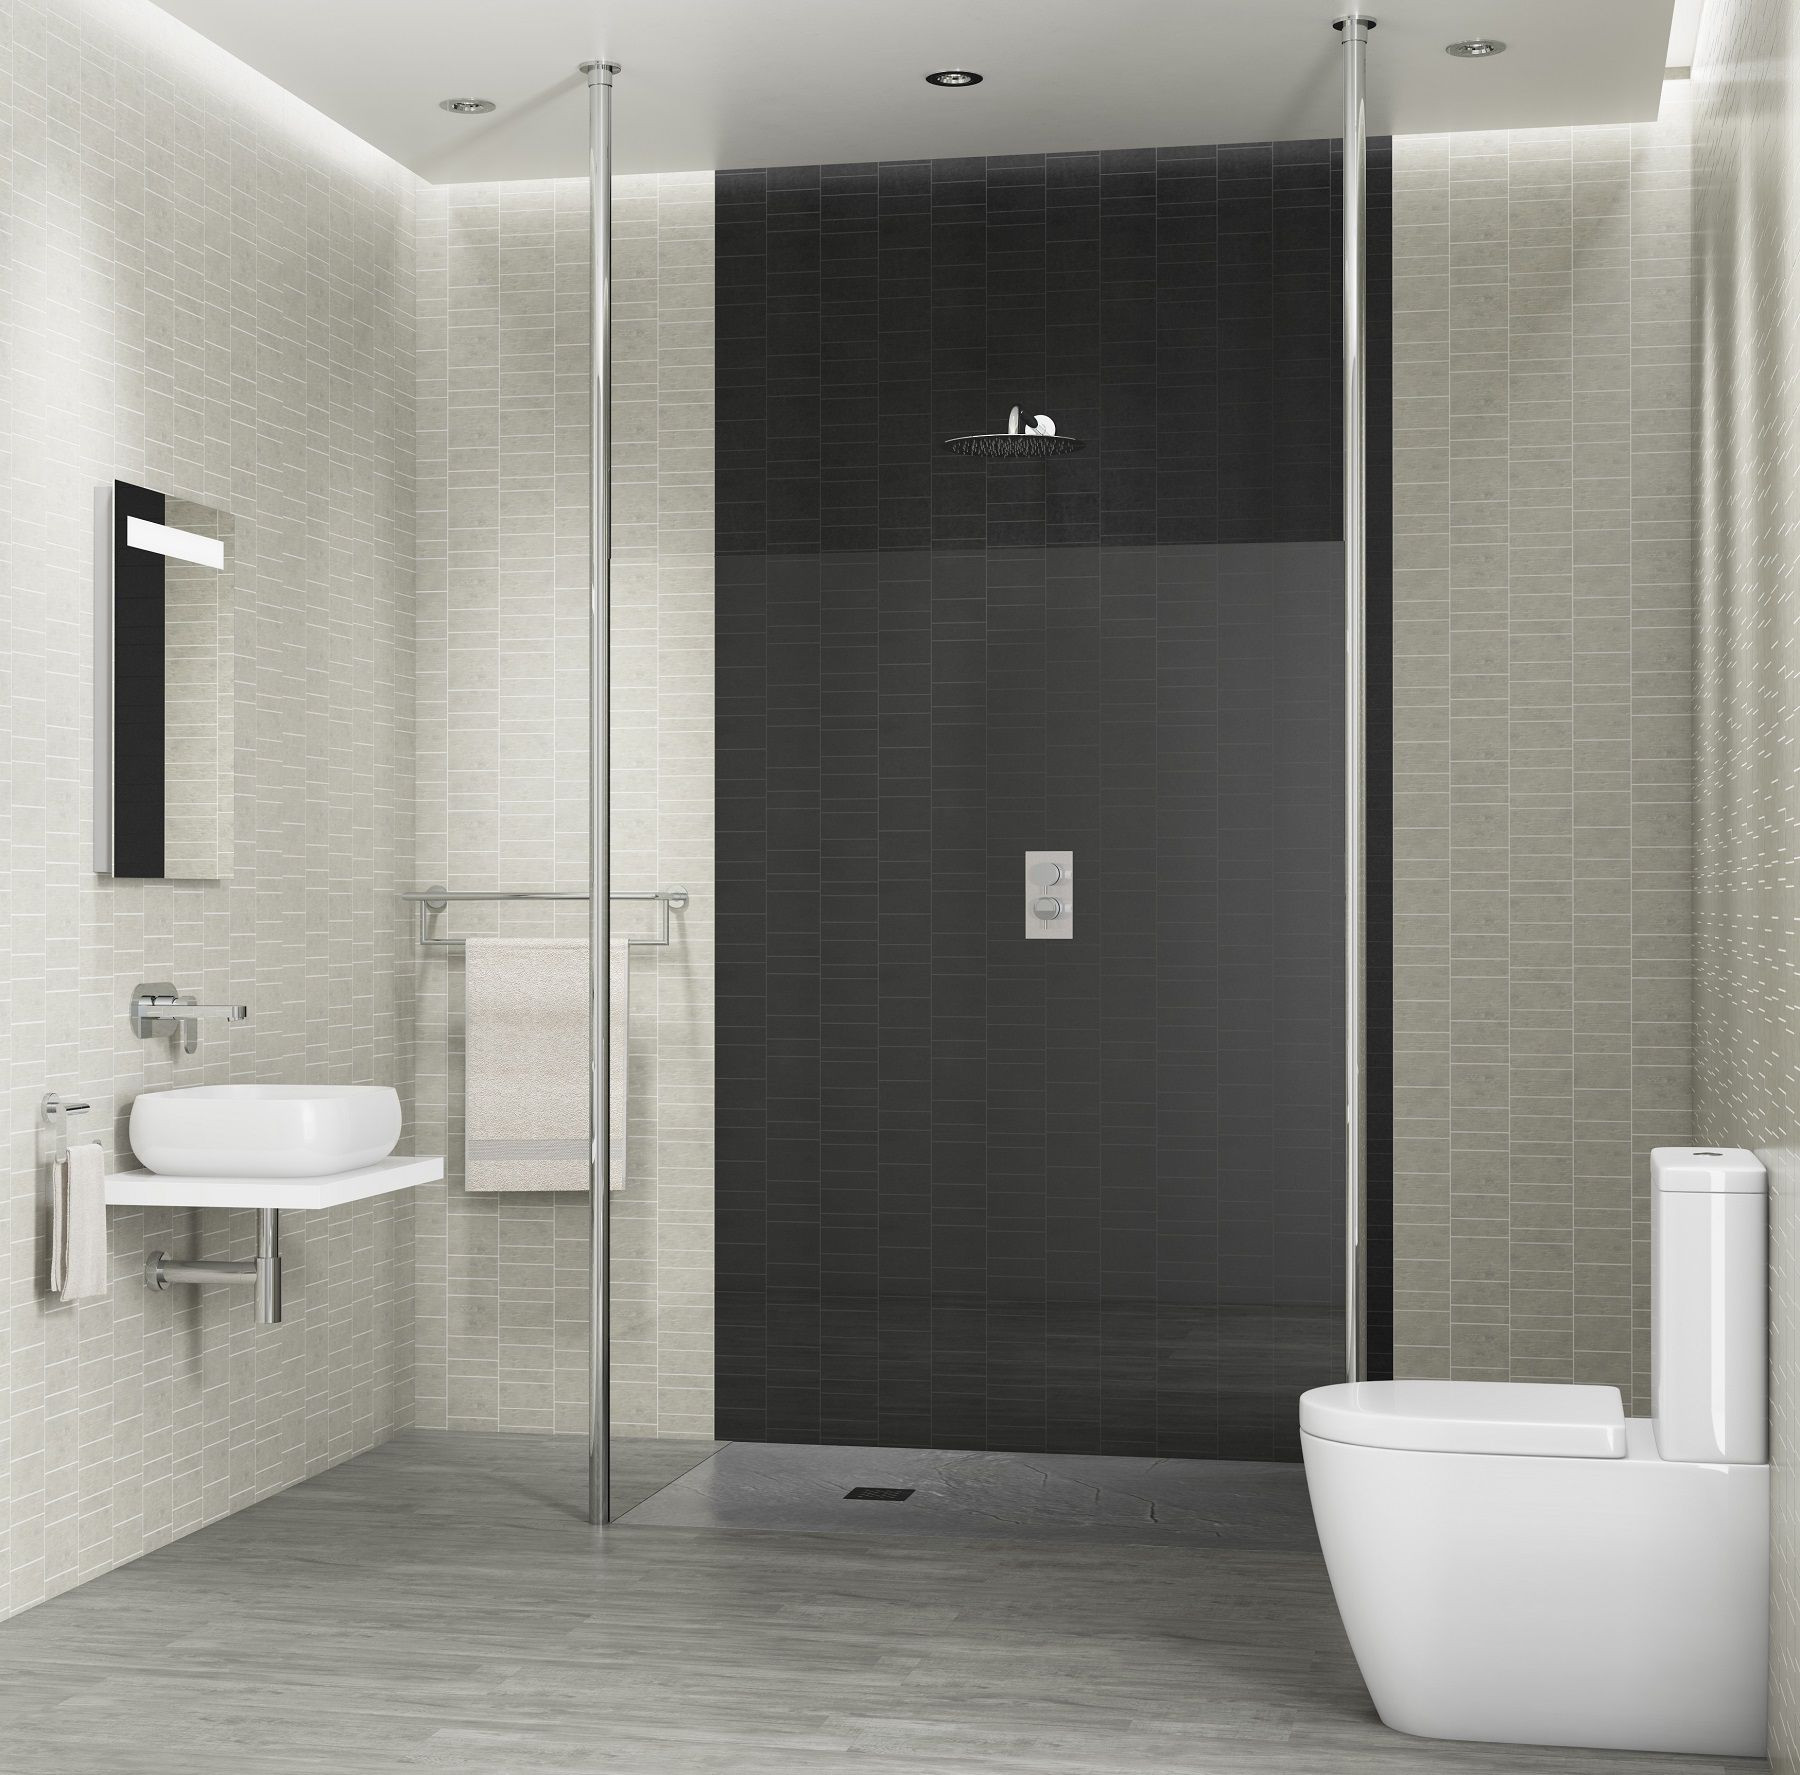 Bathroom Tile Board
 Black Stone Tile Effect PVC Cladding Bathroom Shower Wall